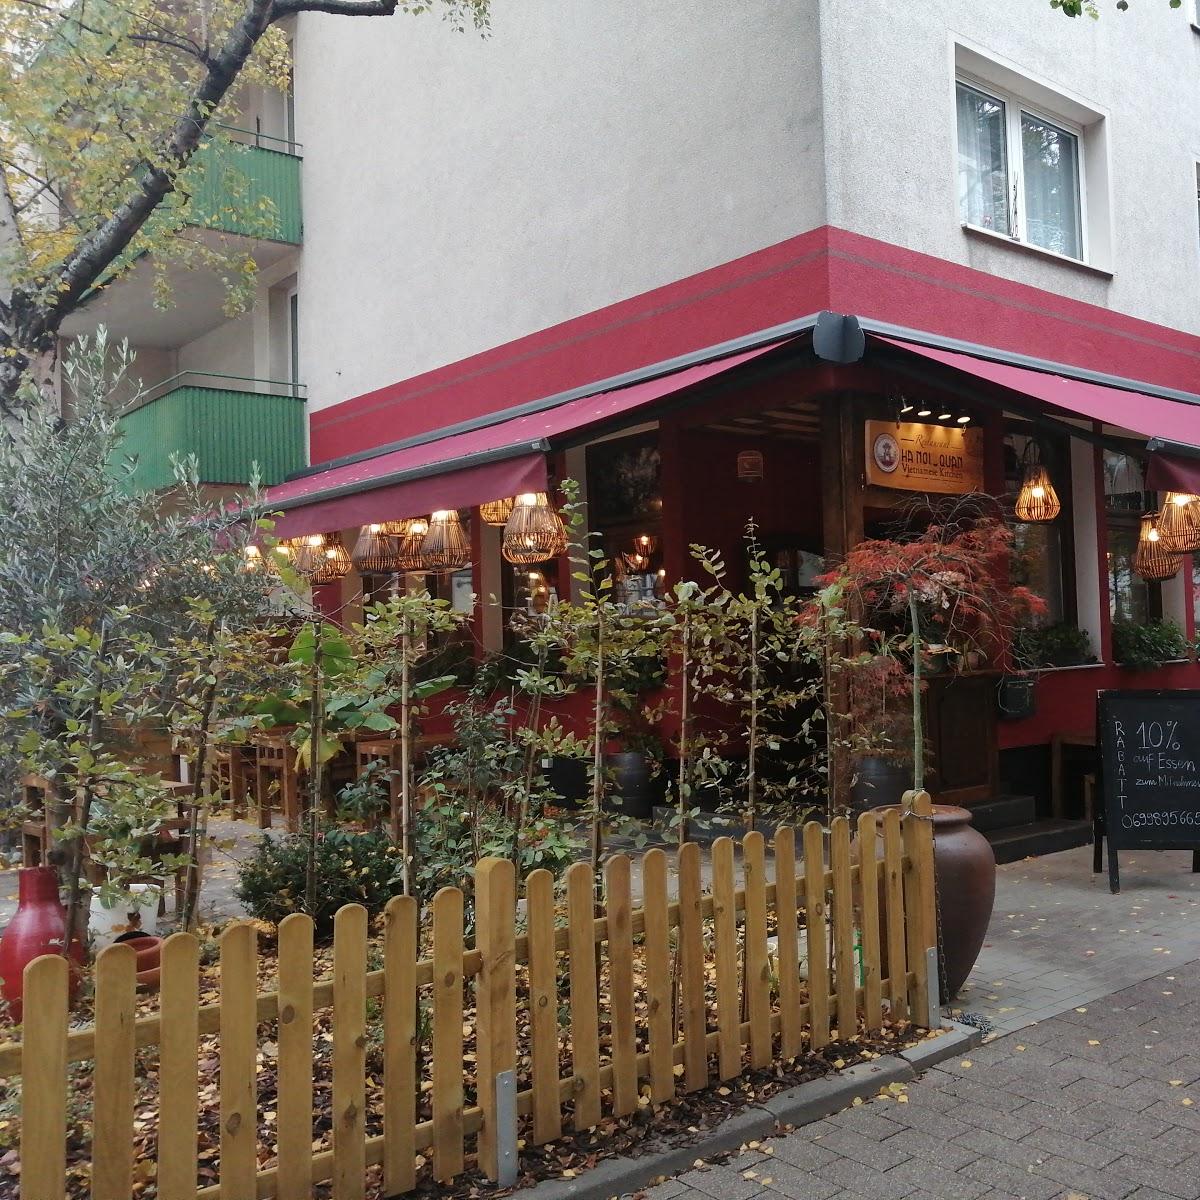 Restaurant "Hanoi Quan" in Frankfurt am Main